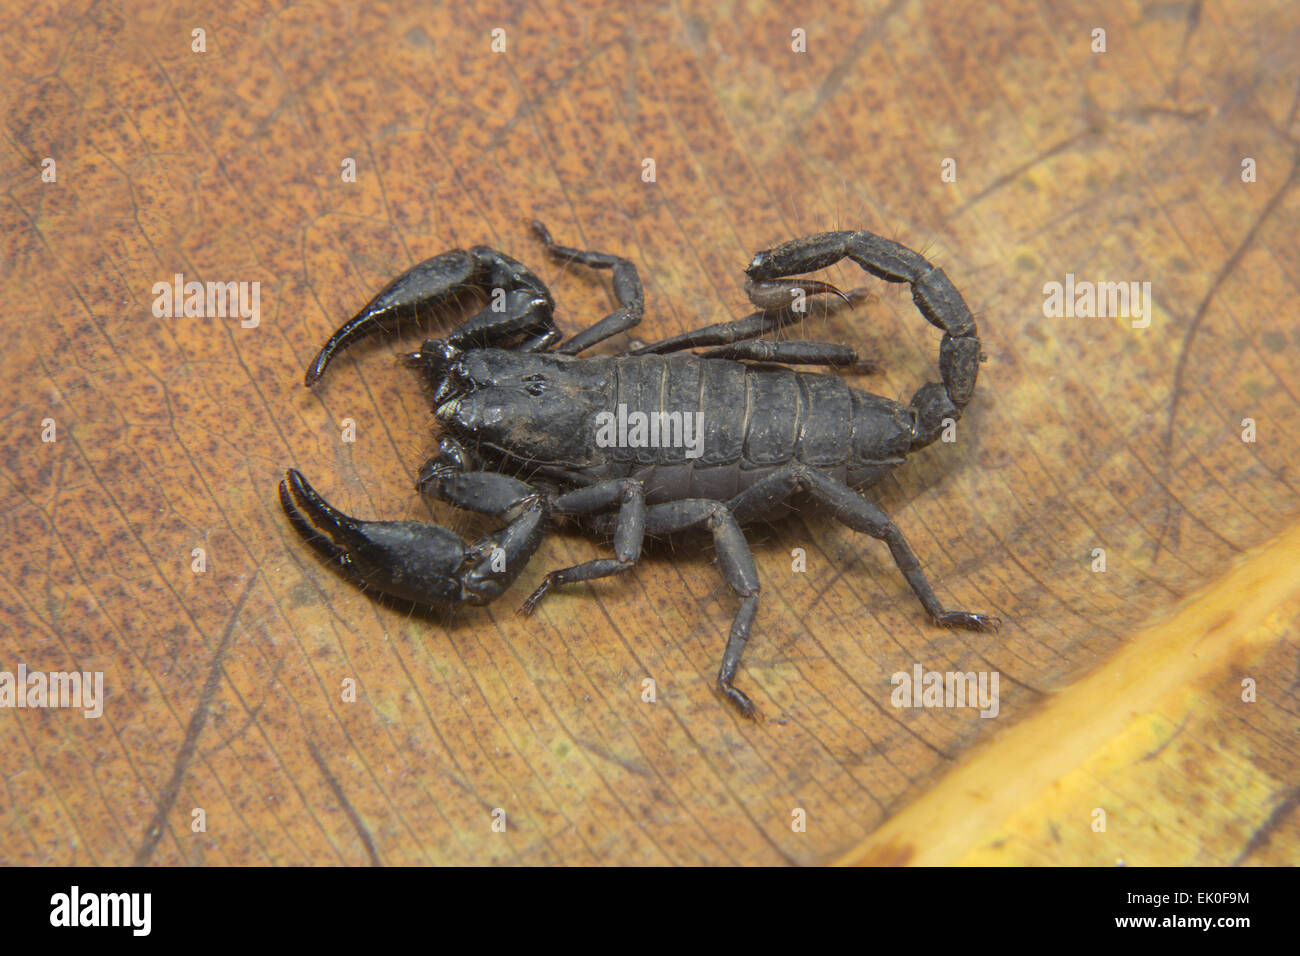 Forest scorpion, Heterometrus sp, Scorpionidae, Neyyar wildlife sanctuary, Kerala. India Stock Photo